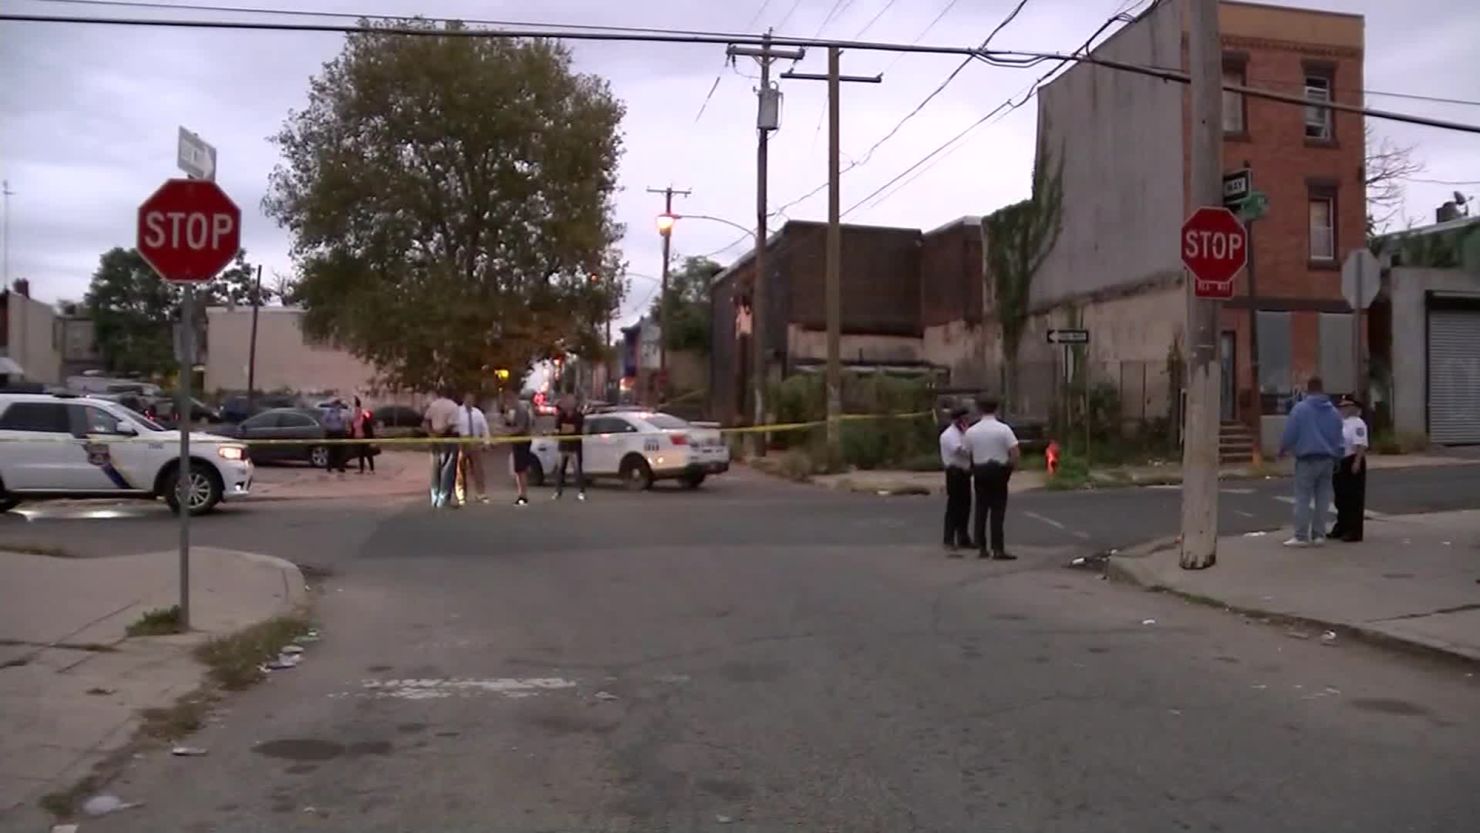 Philadelphia police say 6 people were shot 